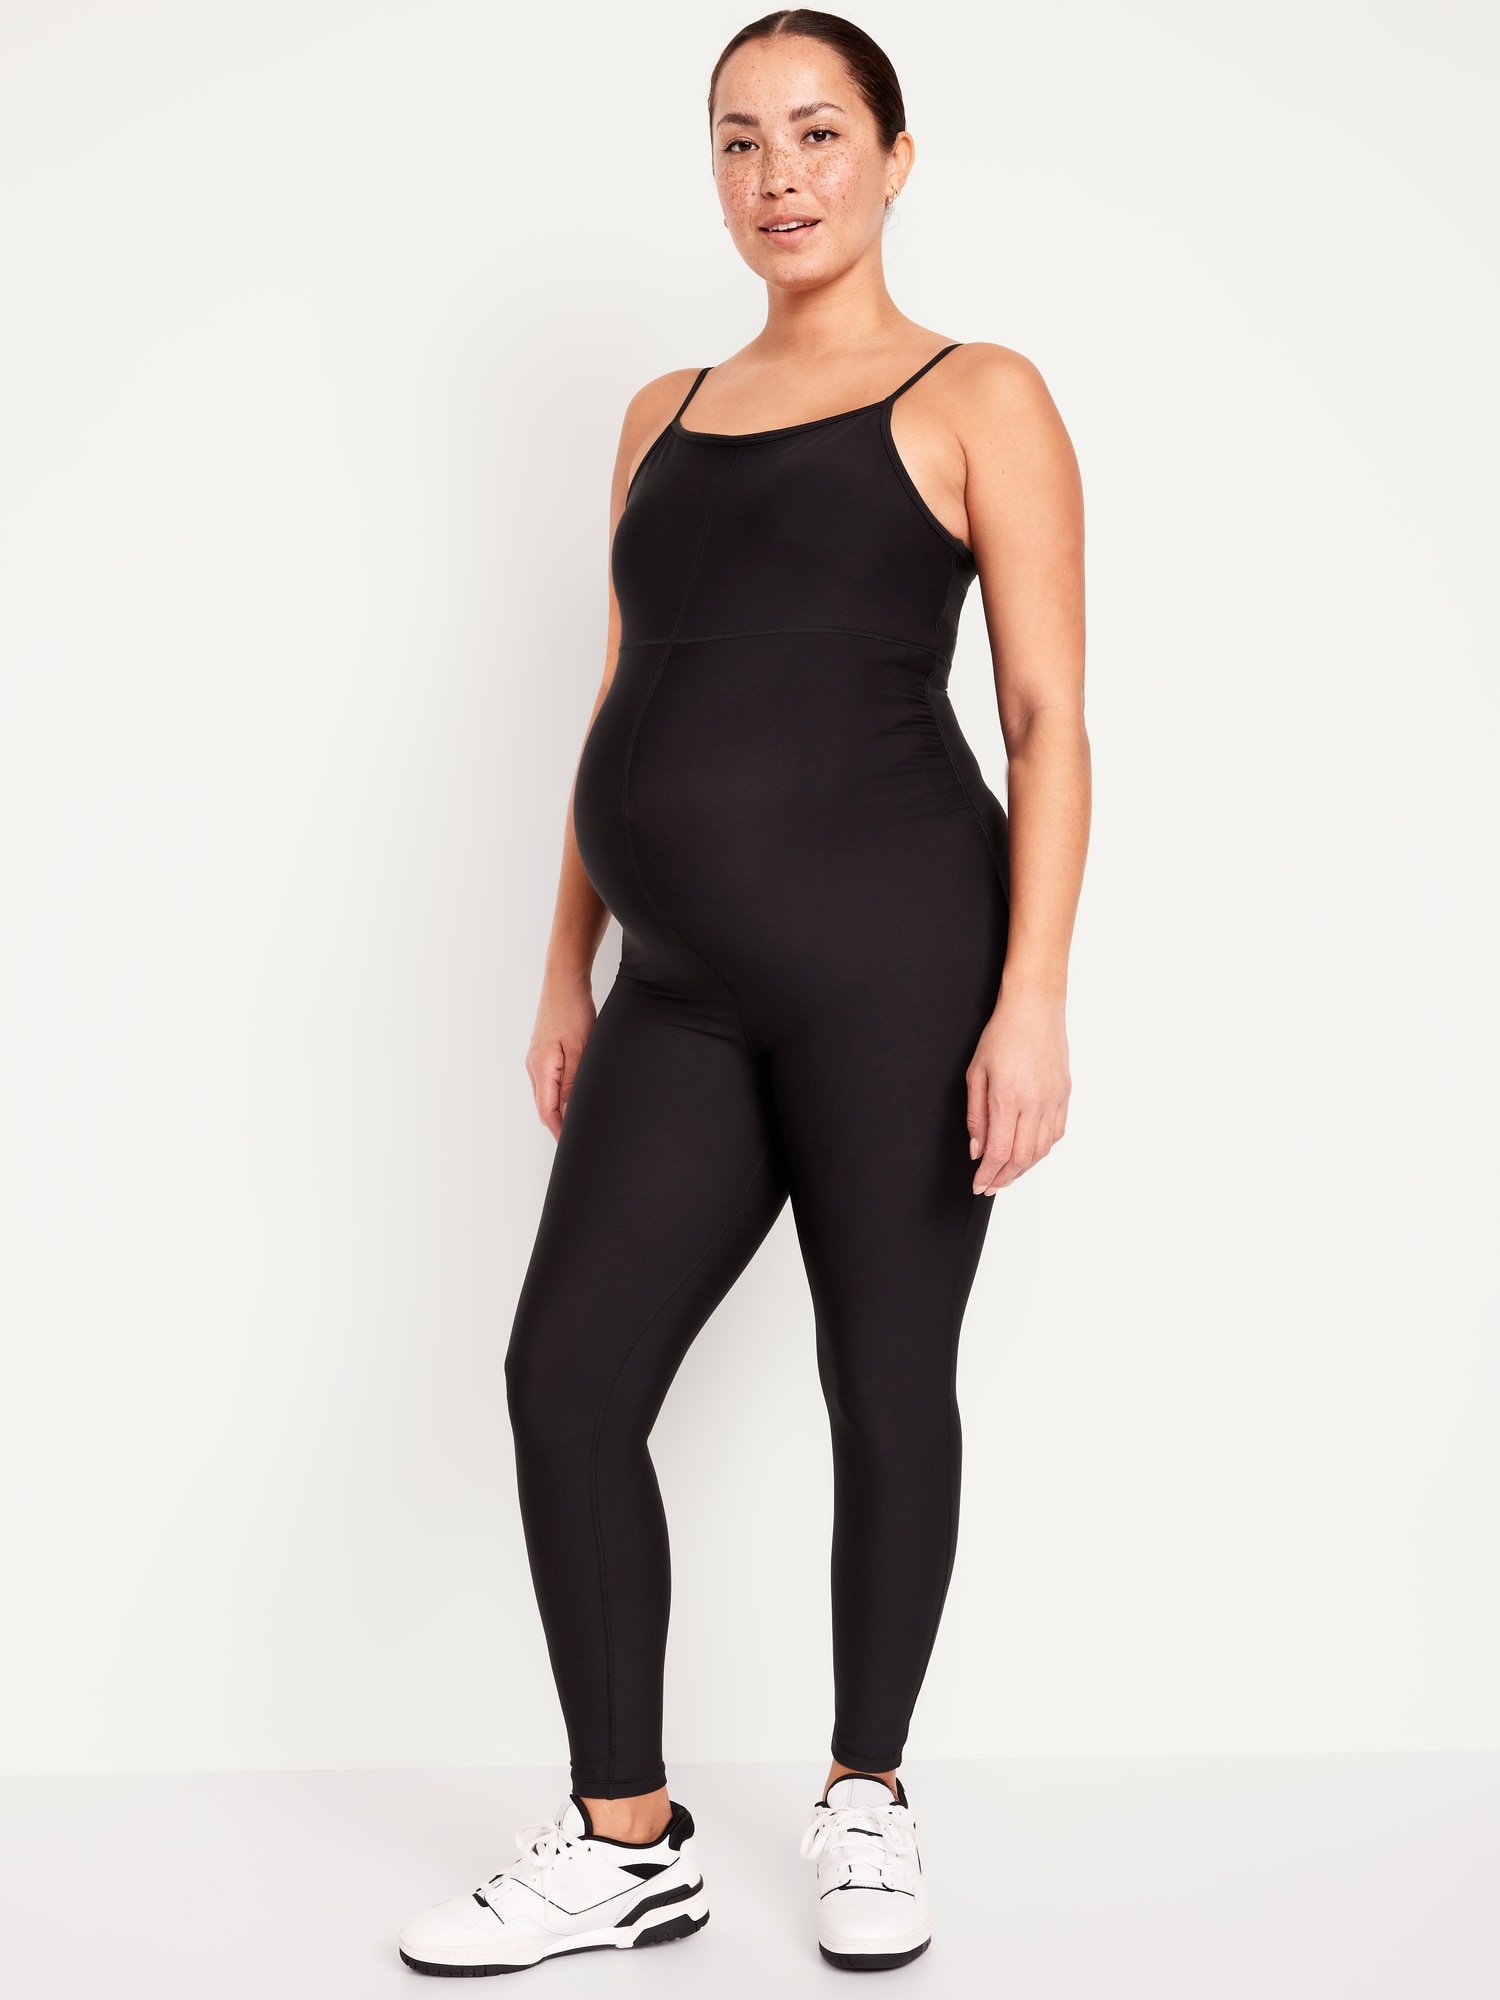 Lataly Women's Maternity Bodysuit Pregnancy Shapewear Sleeveless Tank Top  Shorts Romper Jumpsuit for women